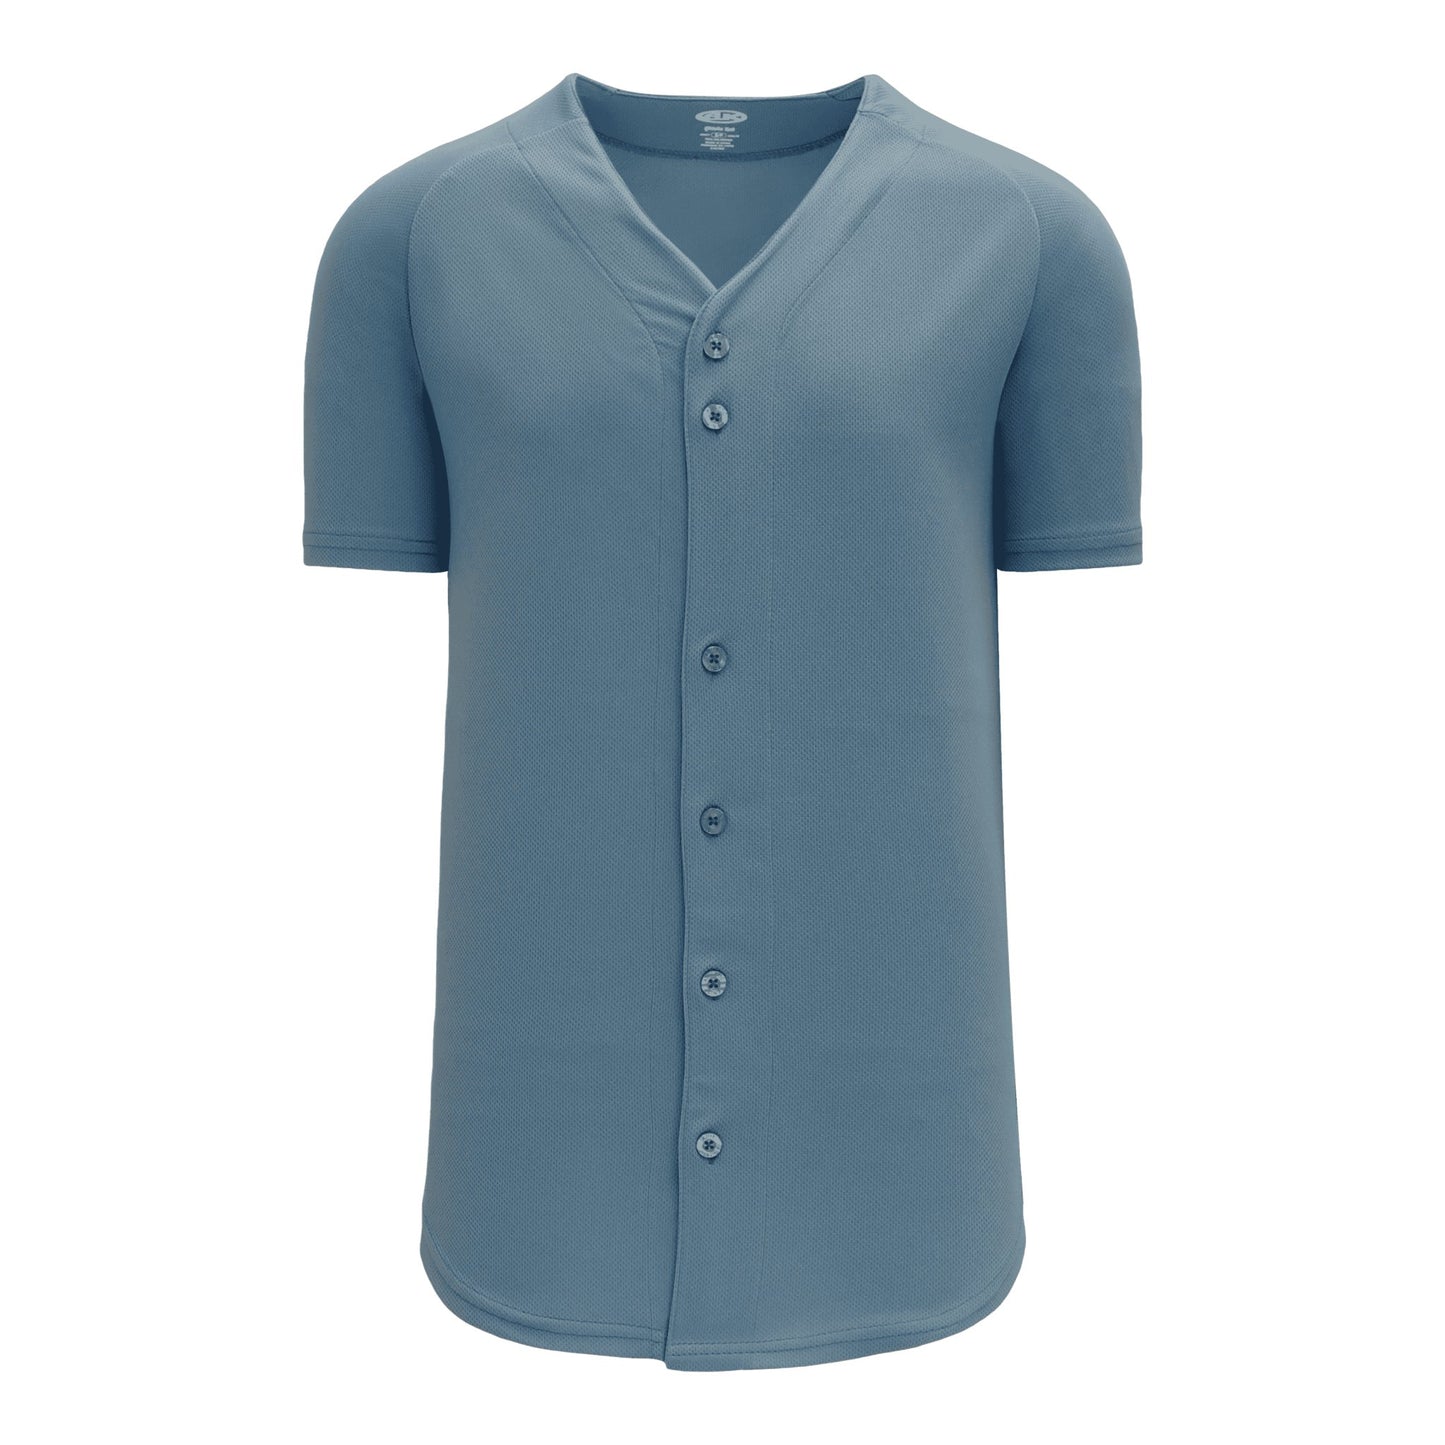 Full Button Baseball Jerseys: Solid Colours, Women's Cut